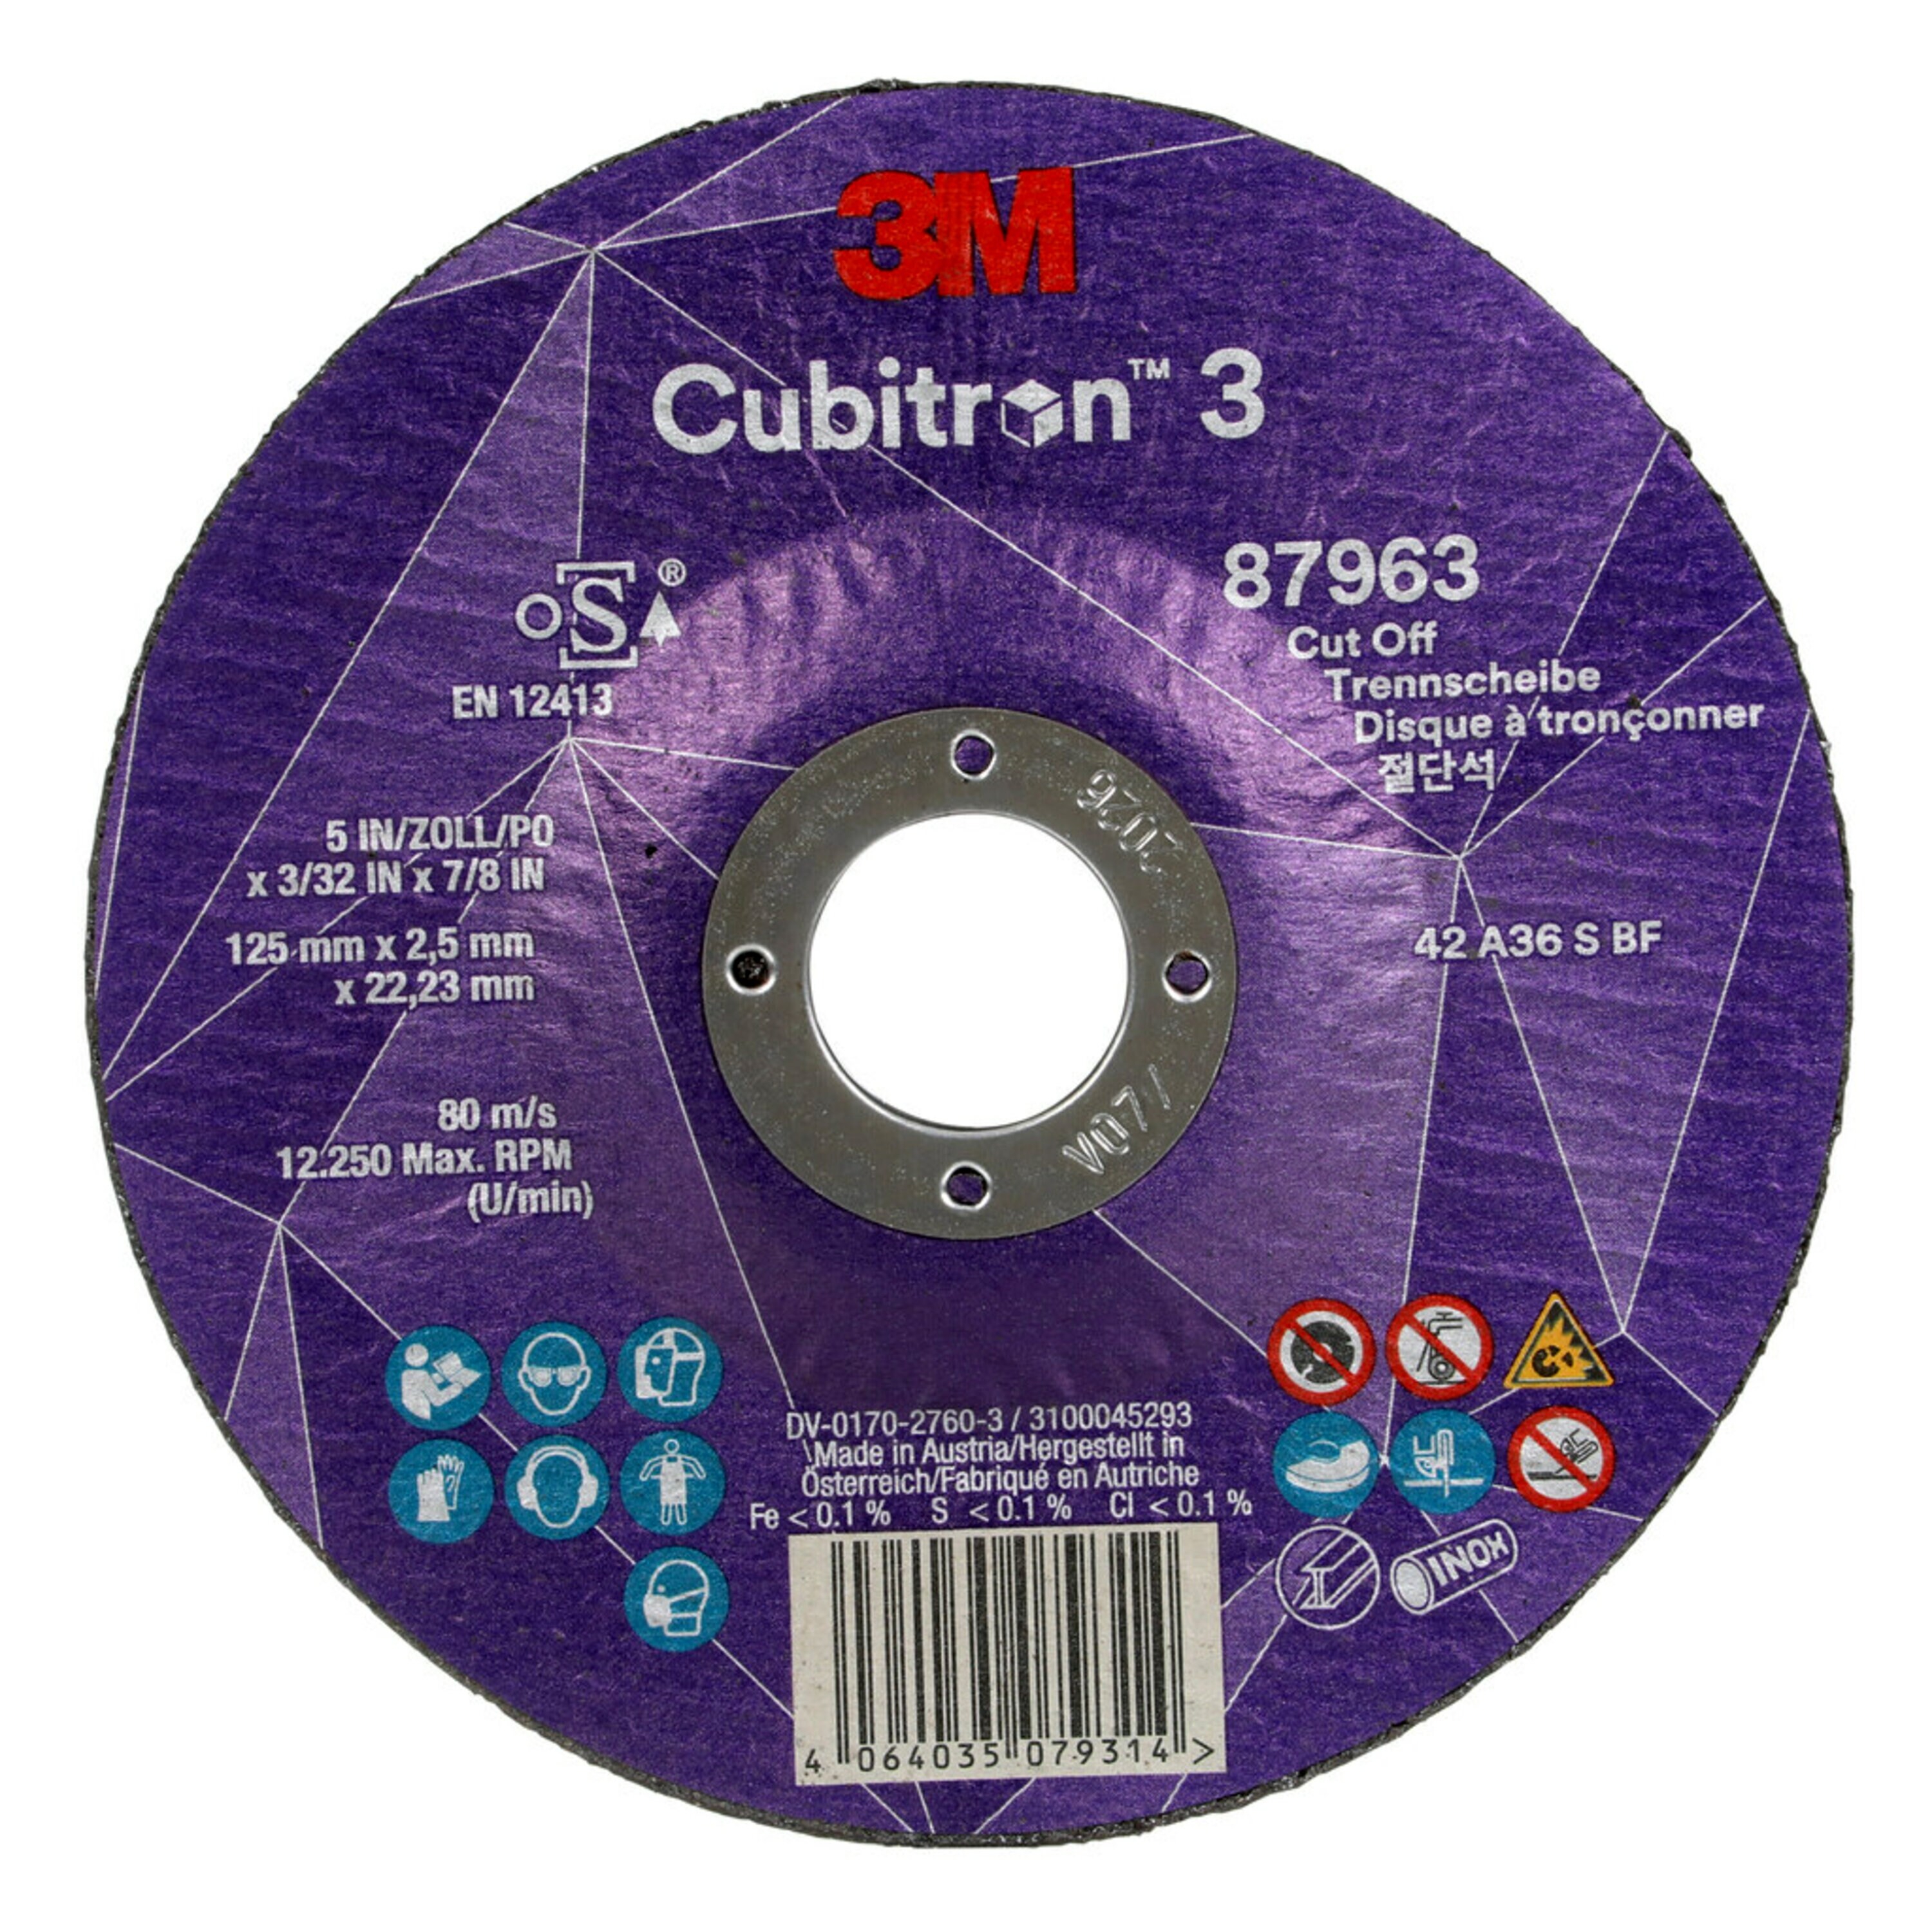 3M Cubitron 3 cut-off wheel, 125 mm, 2.5 mm, 22.23 mm, 36 , type 42 #87963